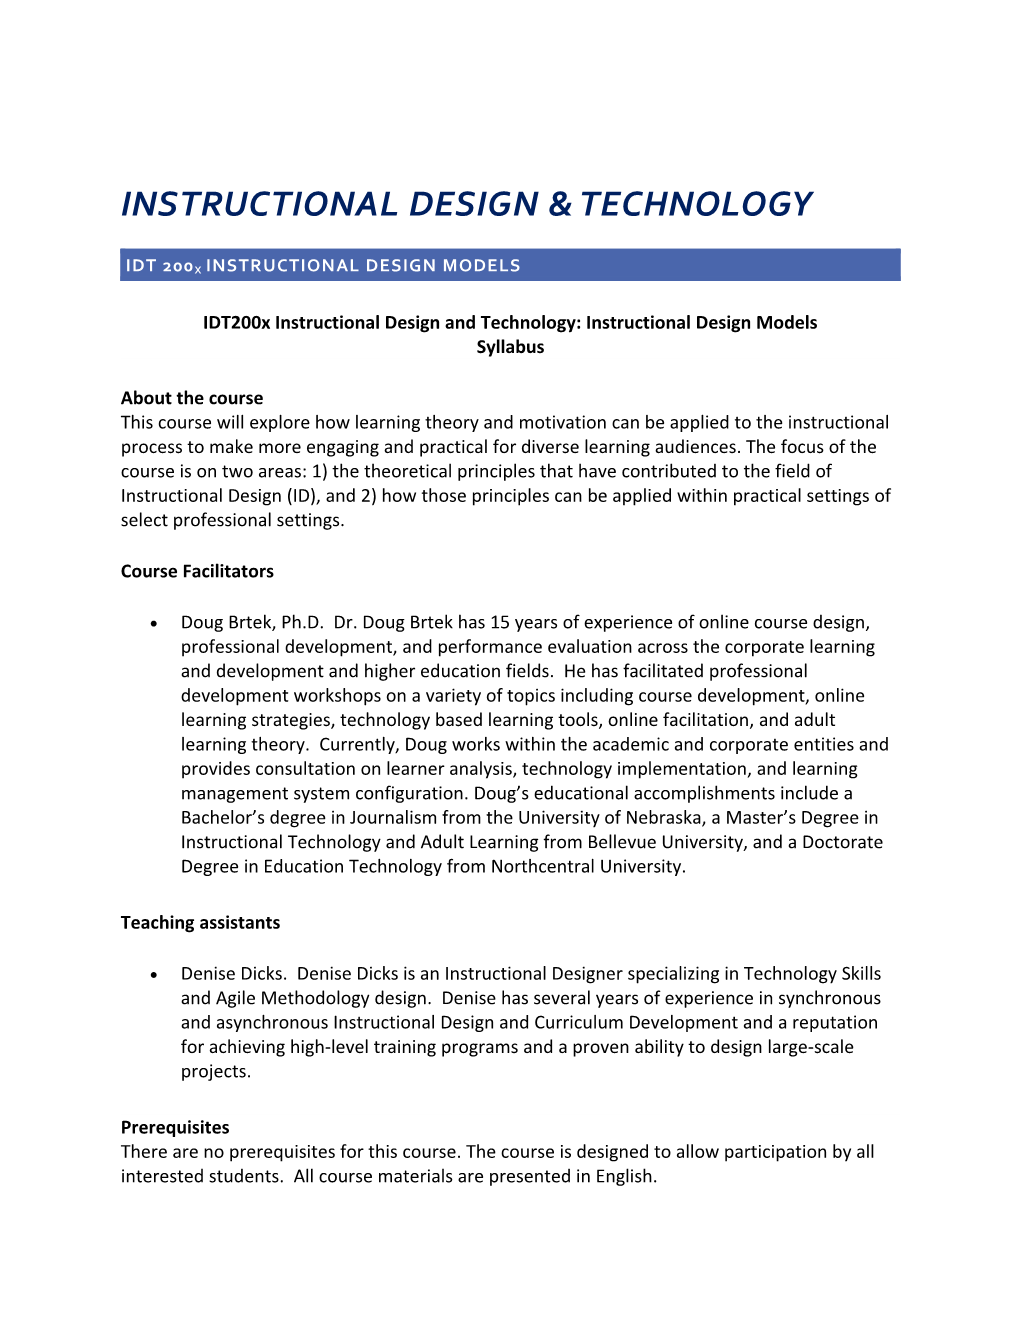 IDT 200Xinstructional Design Models